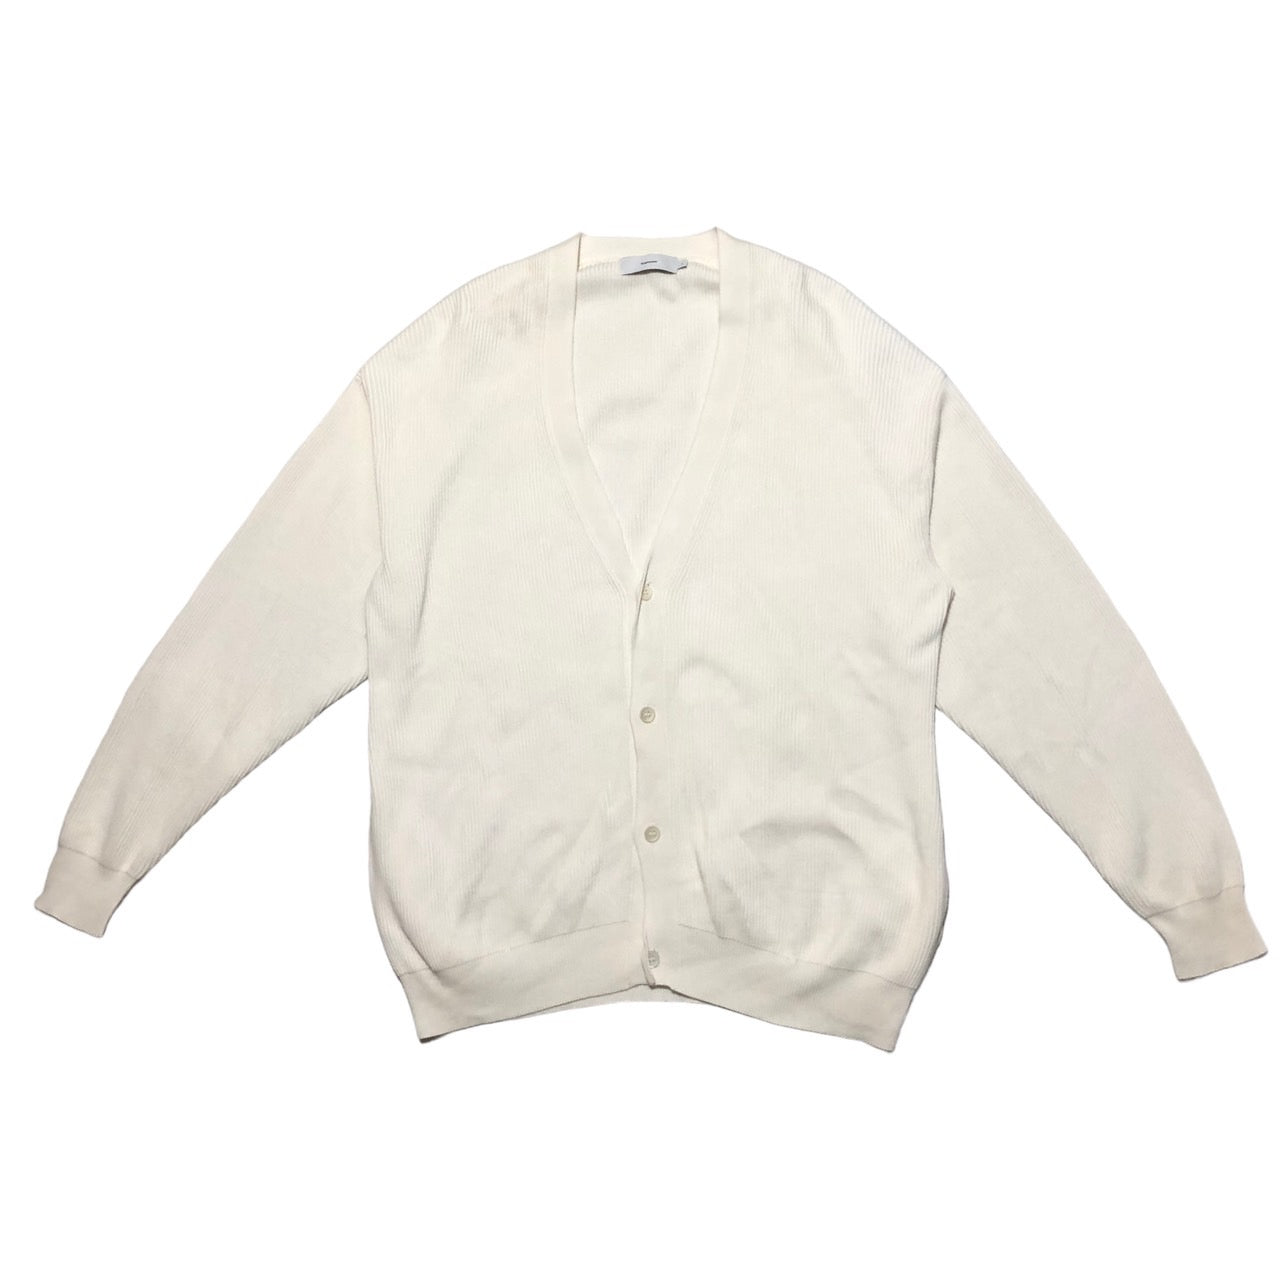 Graphpaper(グラフペーパー) High Density Cotton Knit Cardigan/高密度コットンニットカーディガン  GM201-80075 SIZE 2(M) ホワイト 完売品